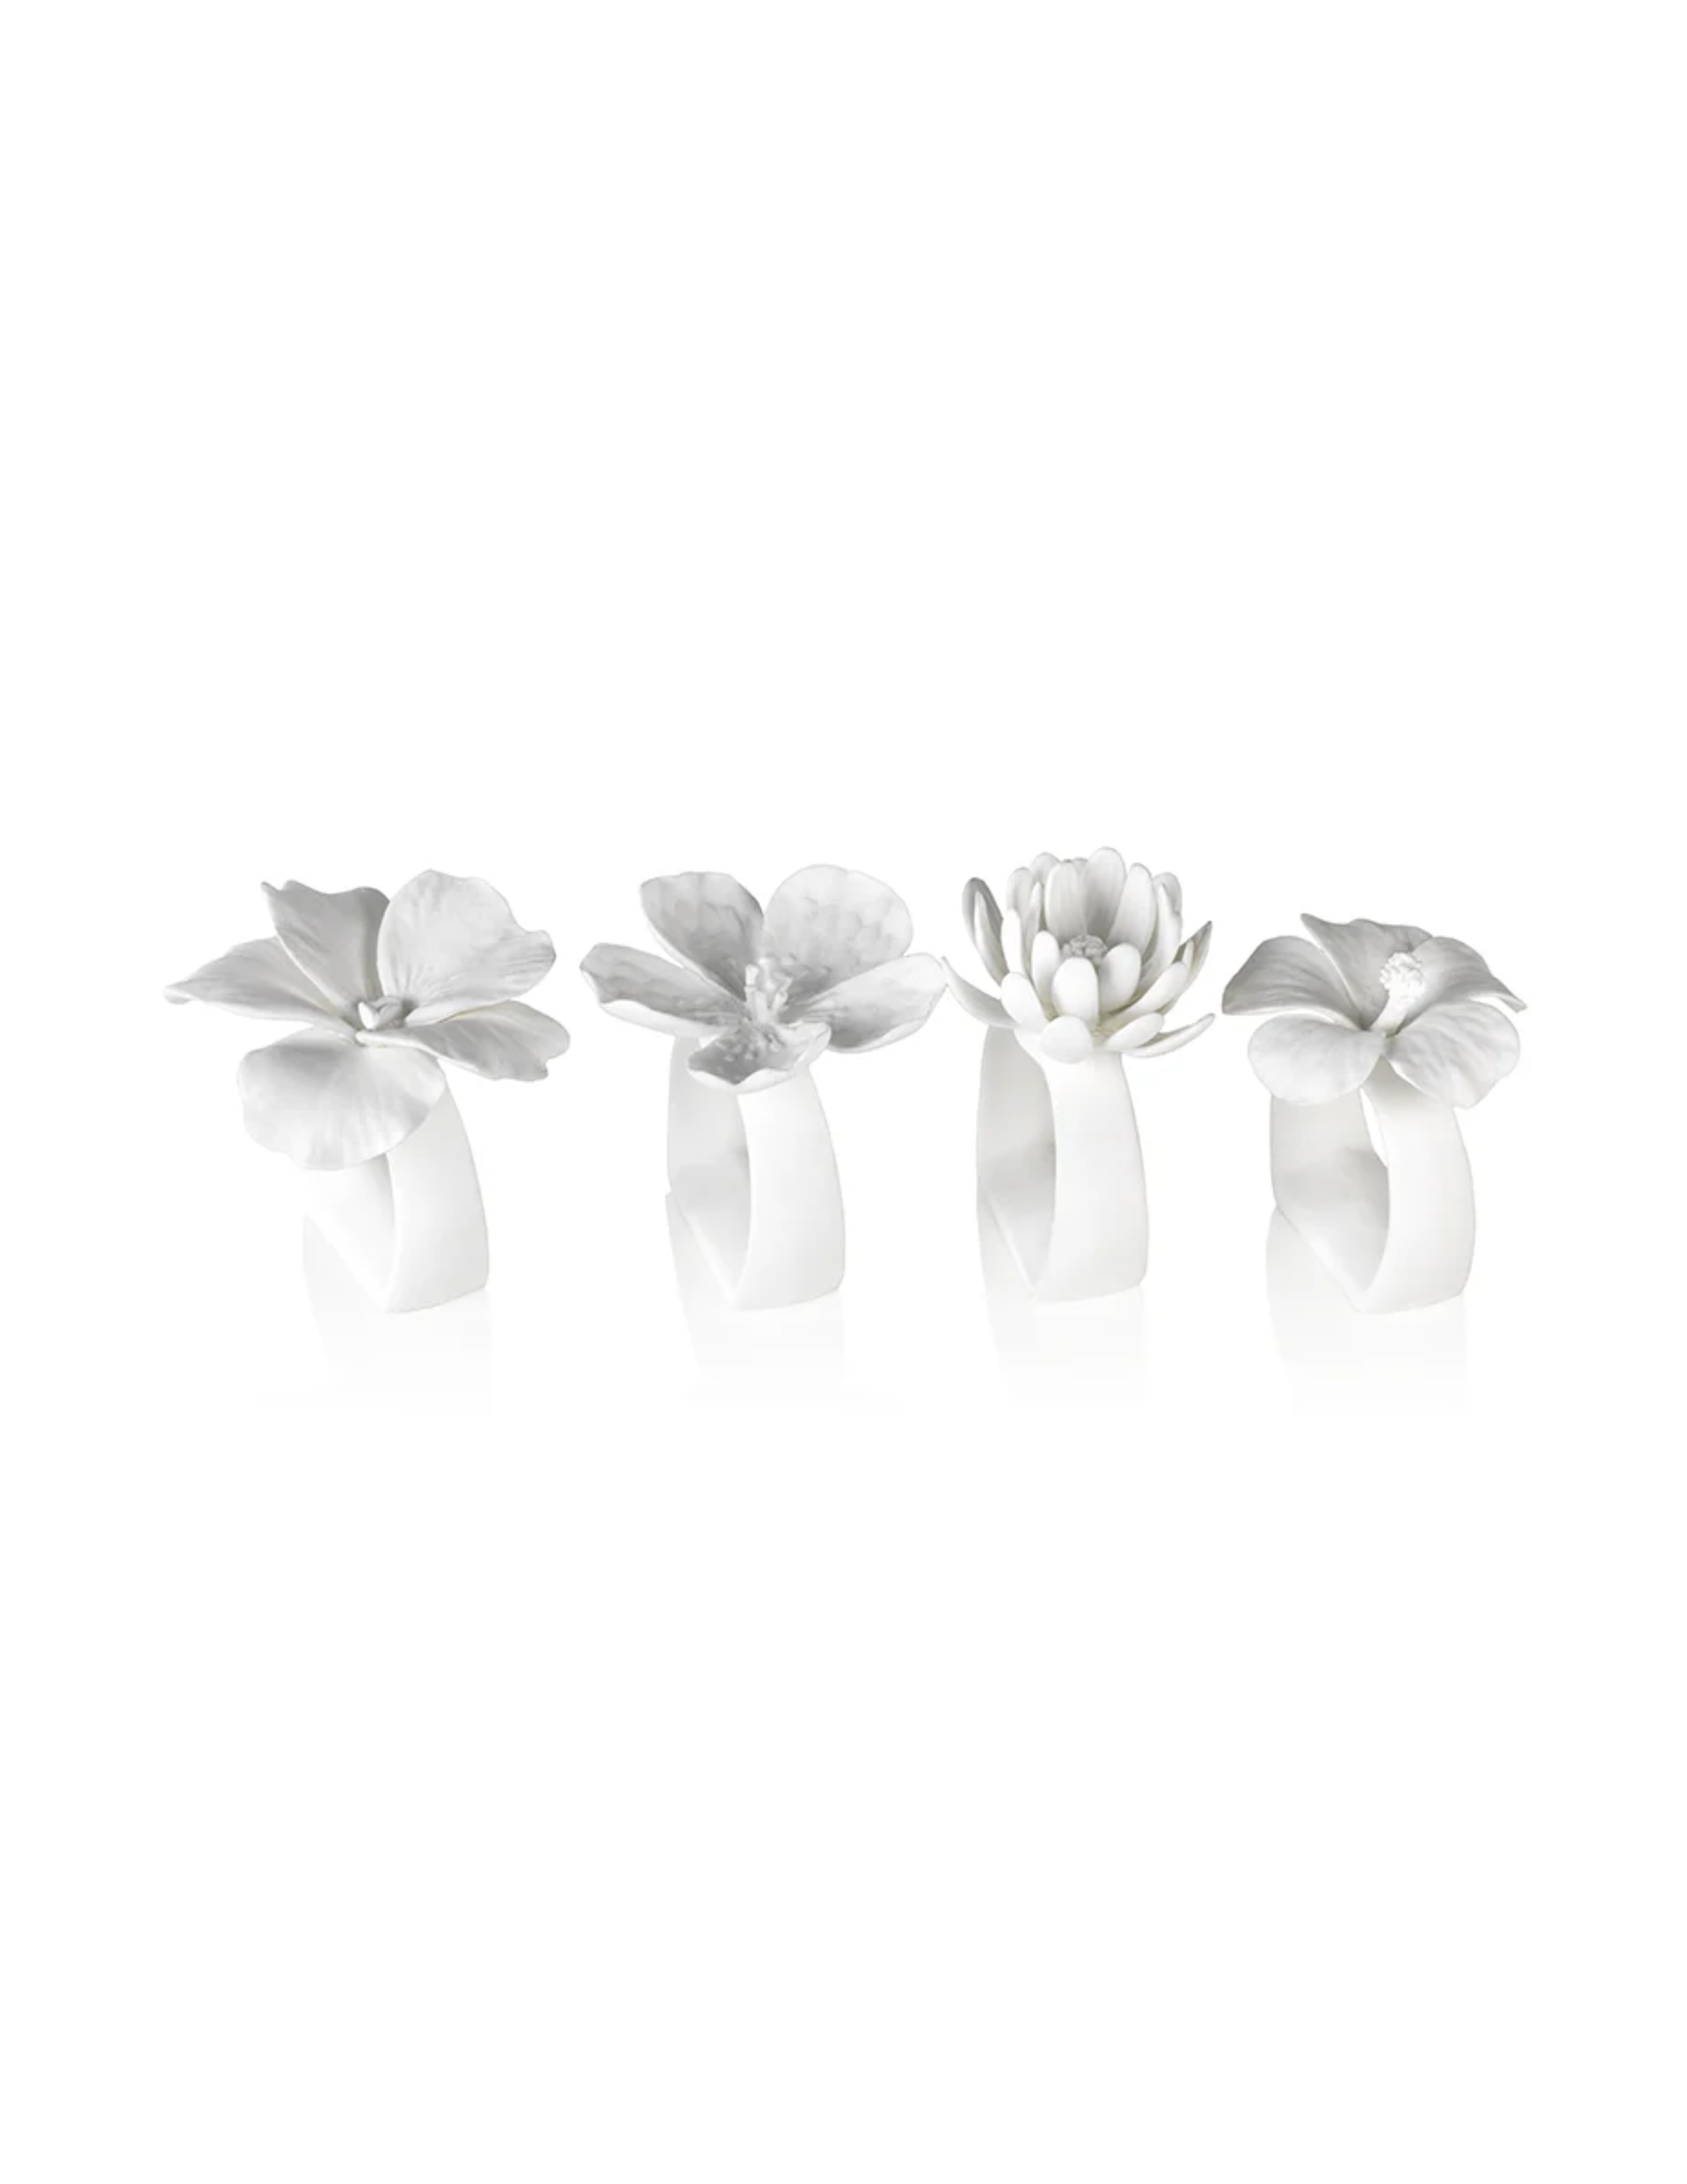 Assorted Bone China Flower Napkin Rings Set of 4